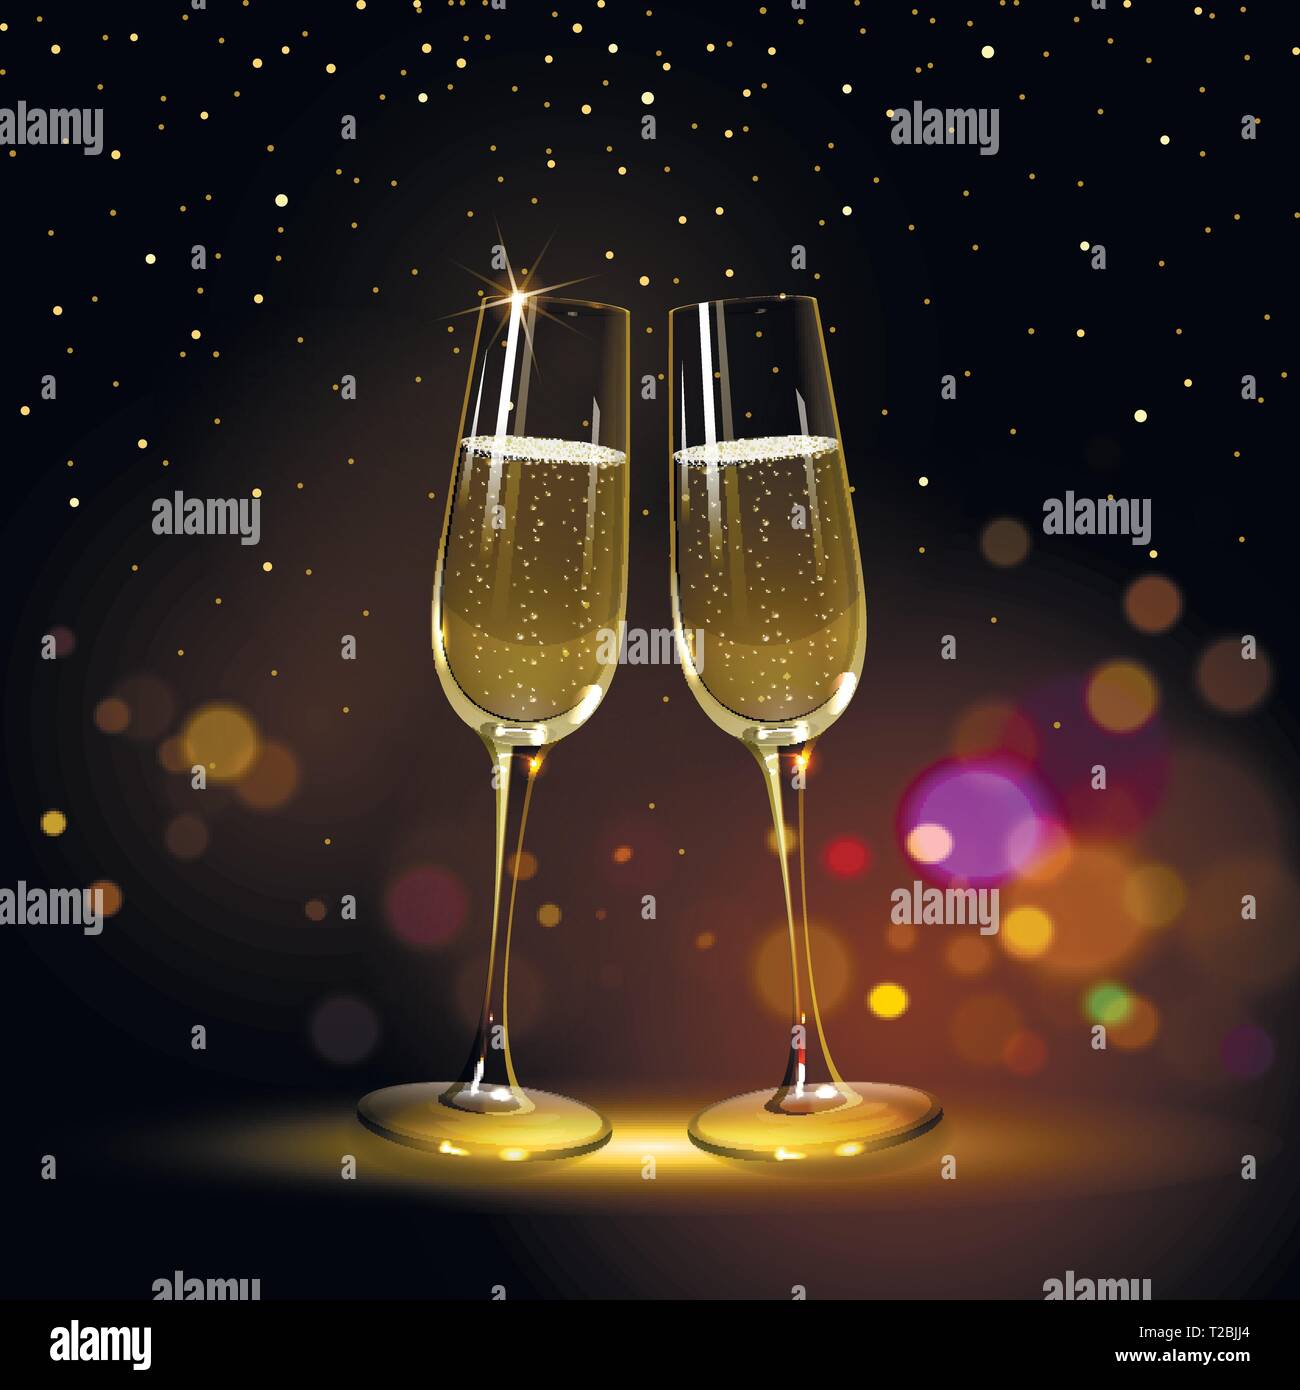 congratulatory background with glasses of champagne and golden confetti Stock Vector